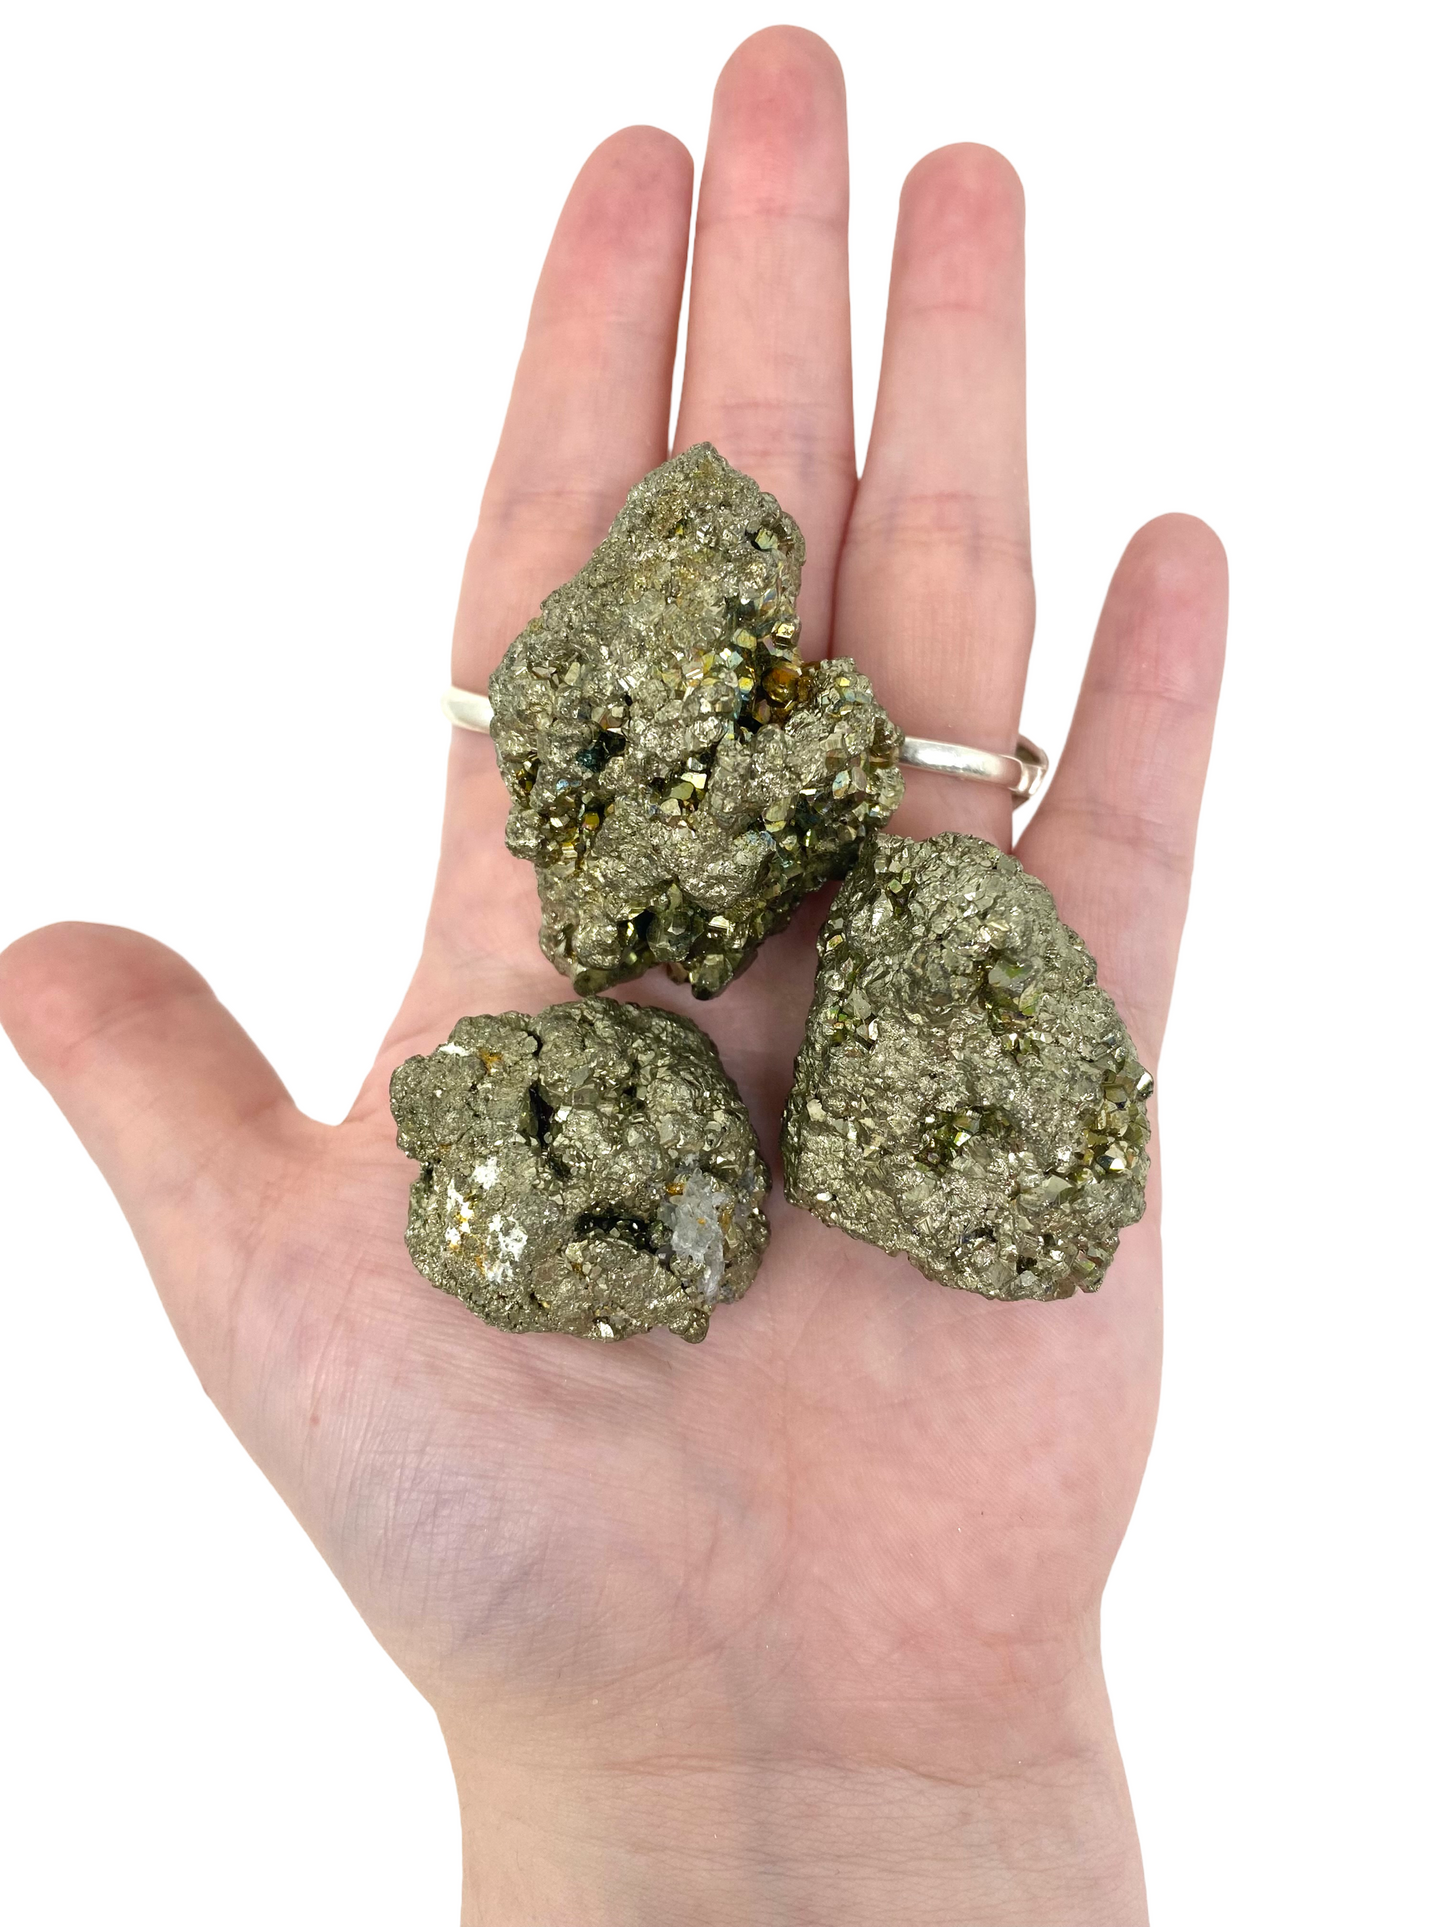 Raw Pyrite Specimens from Peru